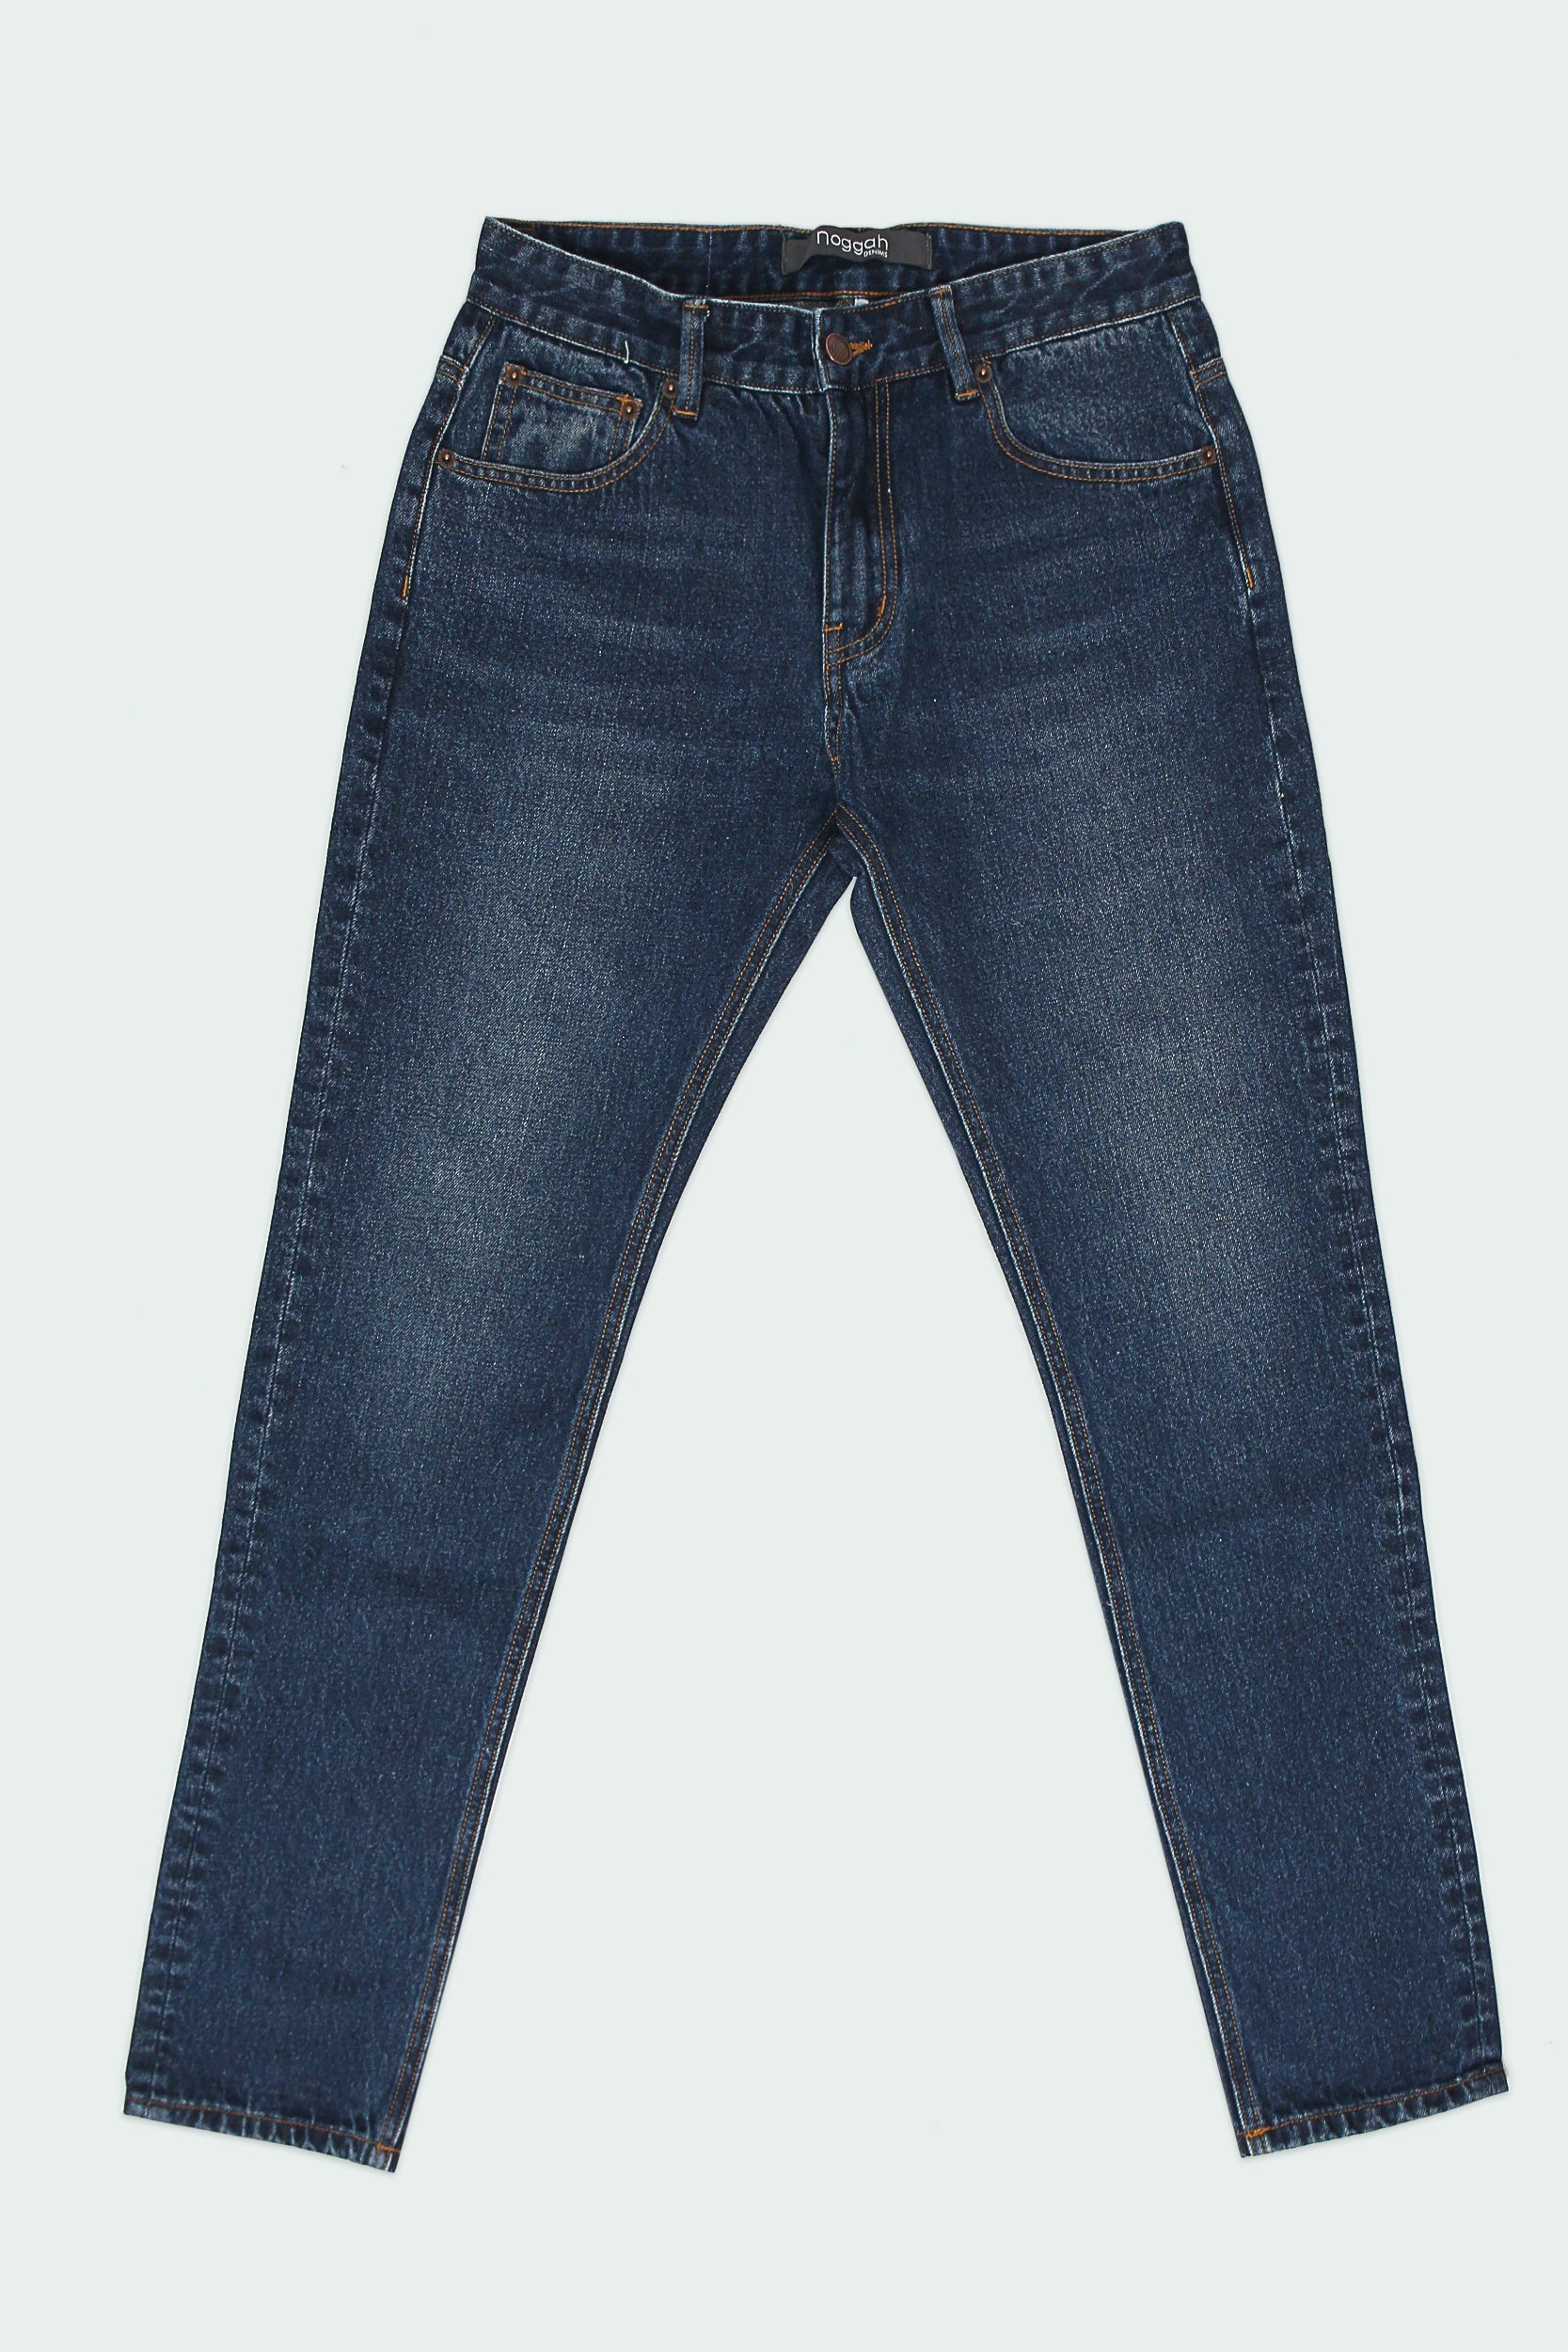 Bare Denim Low Rise Skinny Jeans Womens 30 Medium Blue Denim | eBay